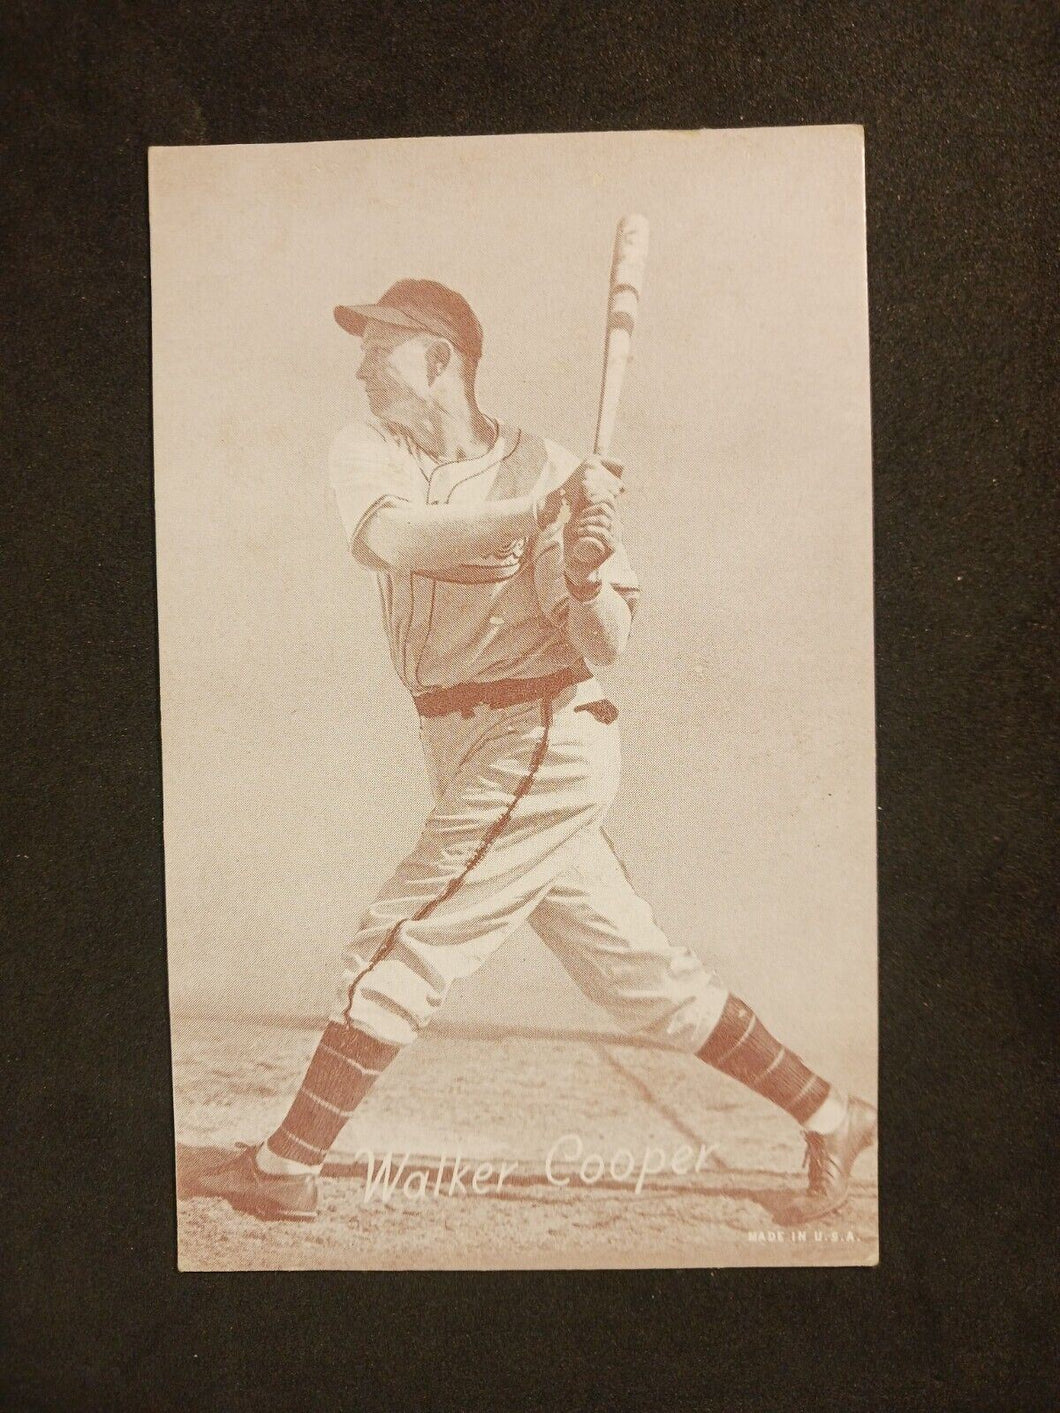 Vintage 1940’s Baseball Exhibit Card – Walker Cooper